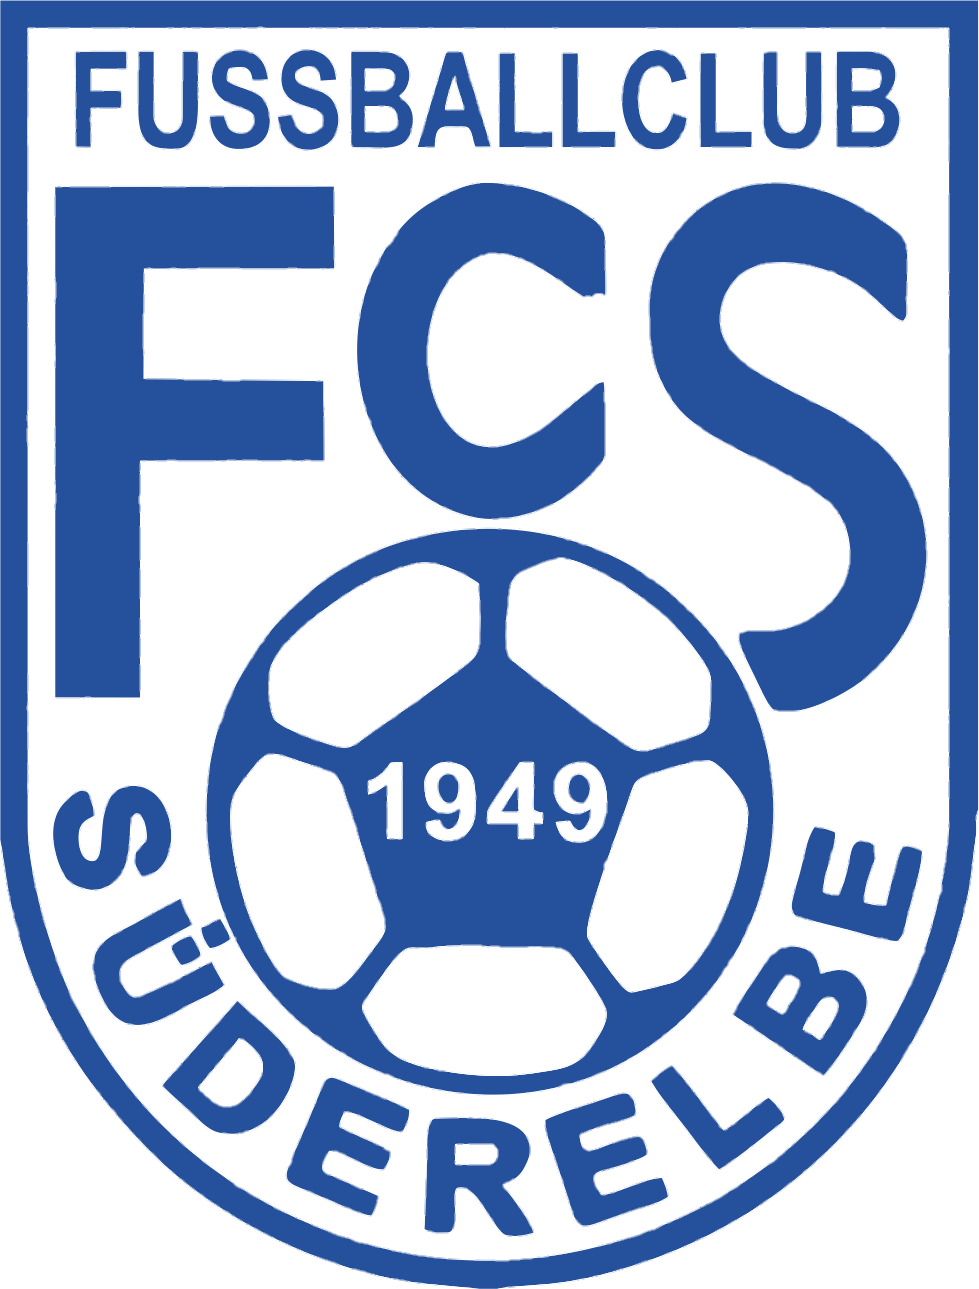 Fußballclub Süderelbe von 1949 e.V. team logo